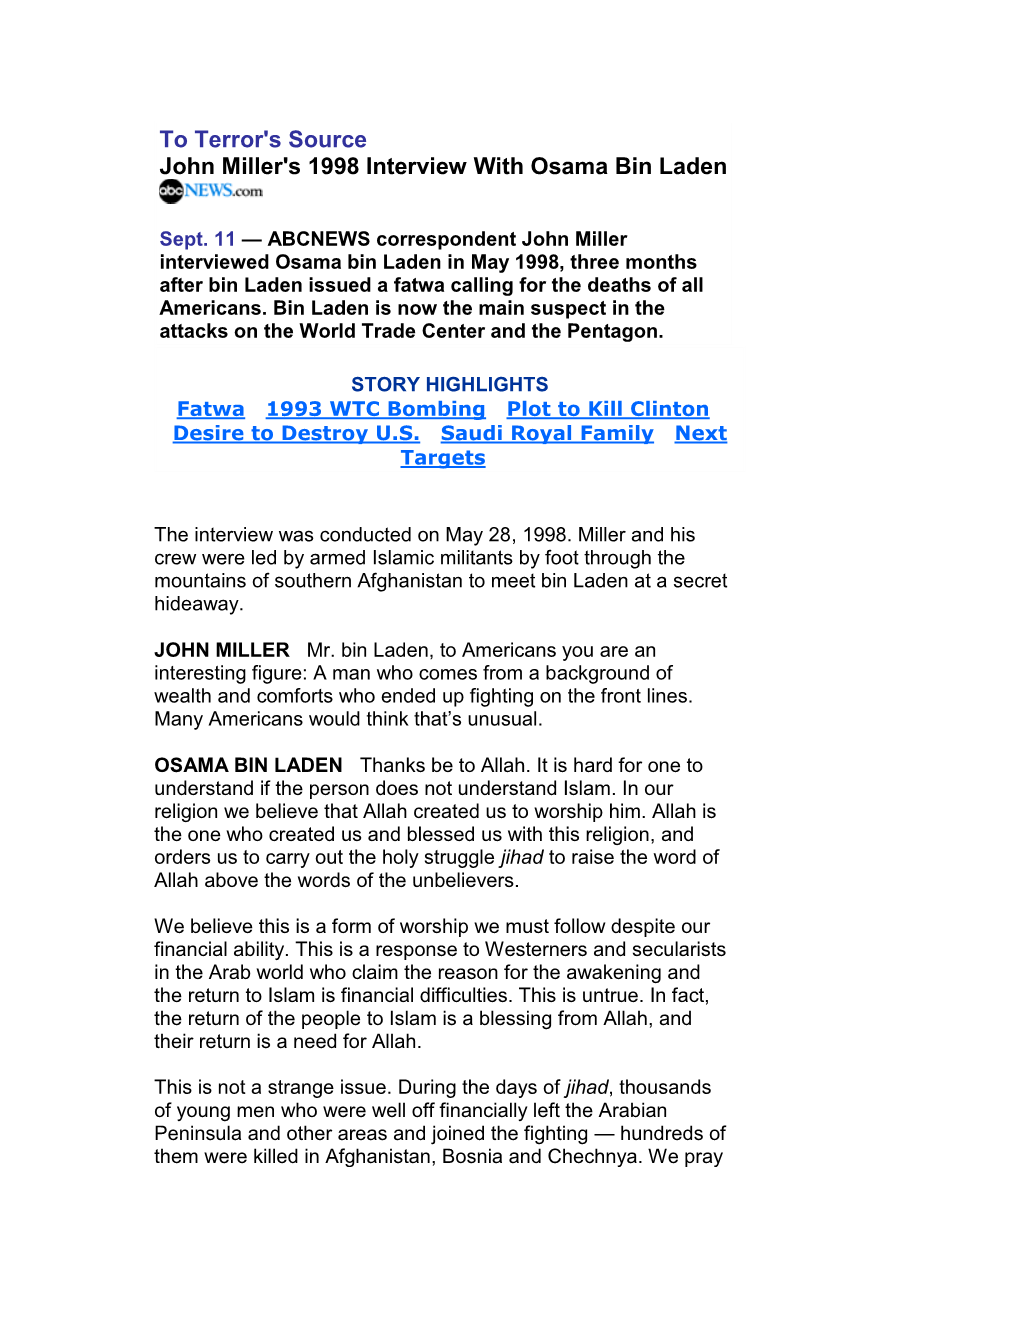 To Terror's Source John Miller's 1998 Interview with Osama Bin Laden